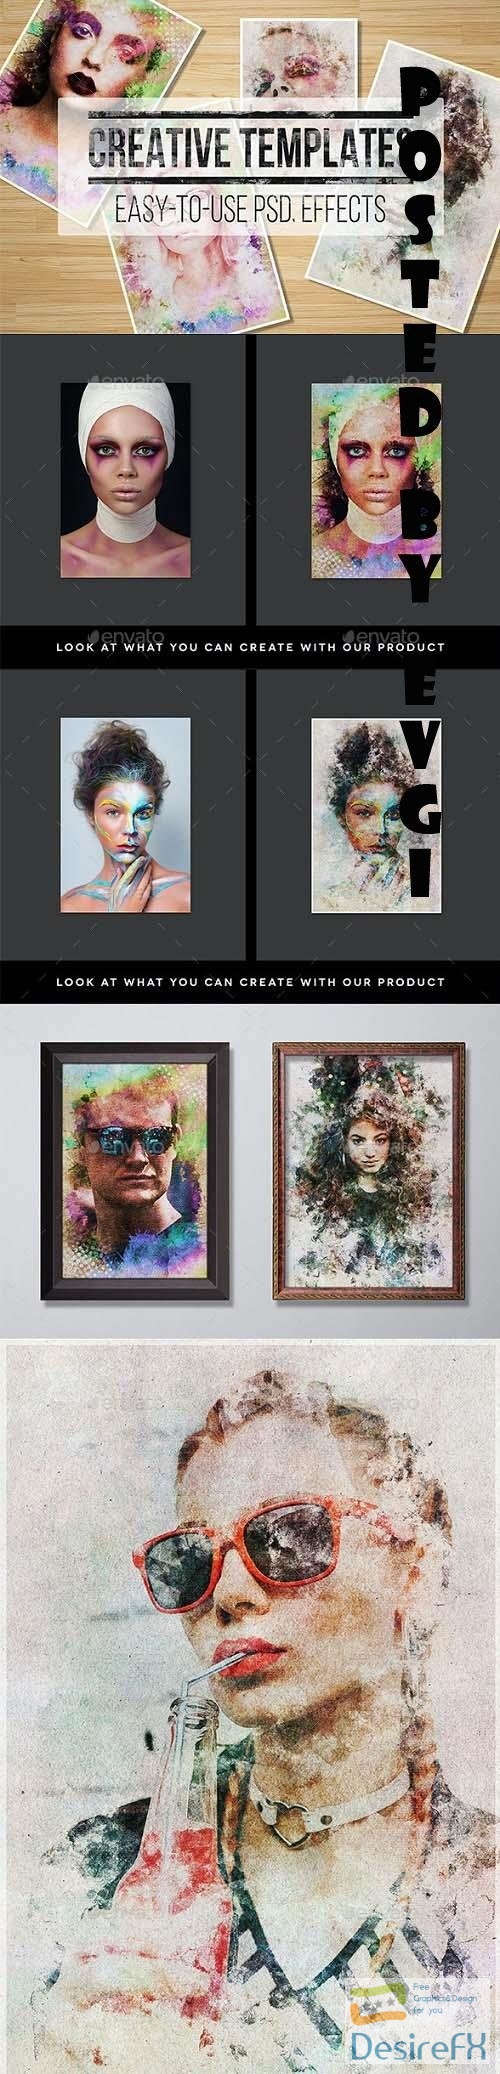 2 Creative Portrait Templates - 22111949 - 2262114